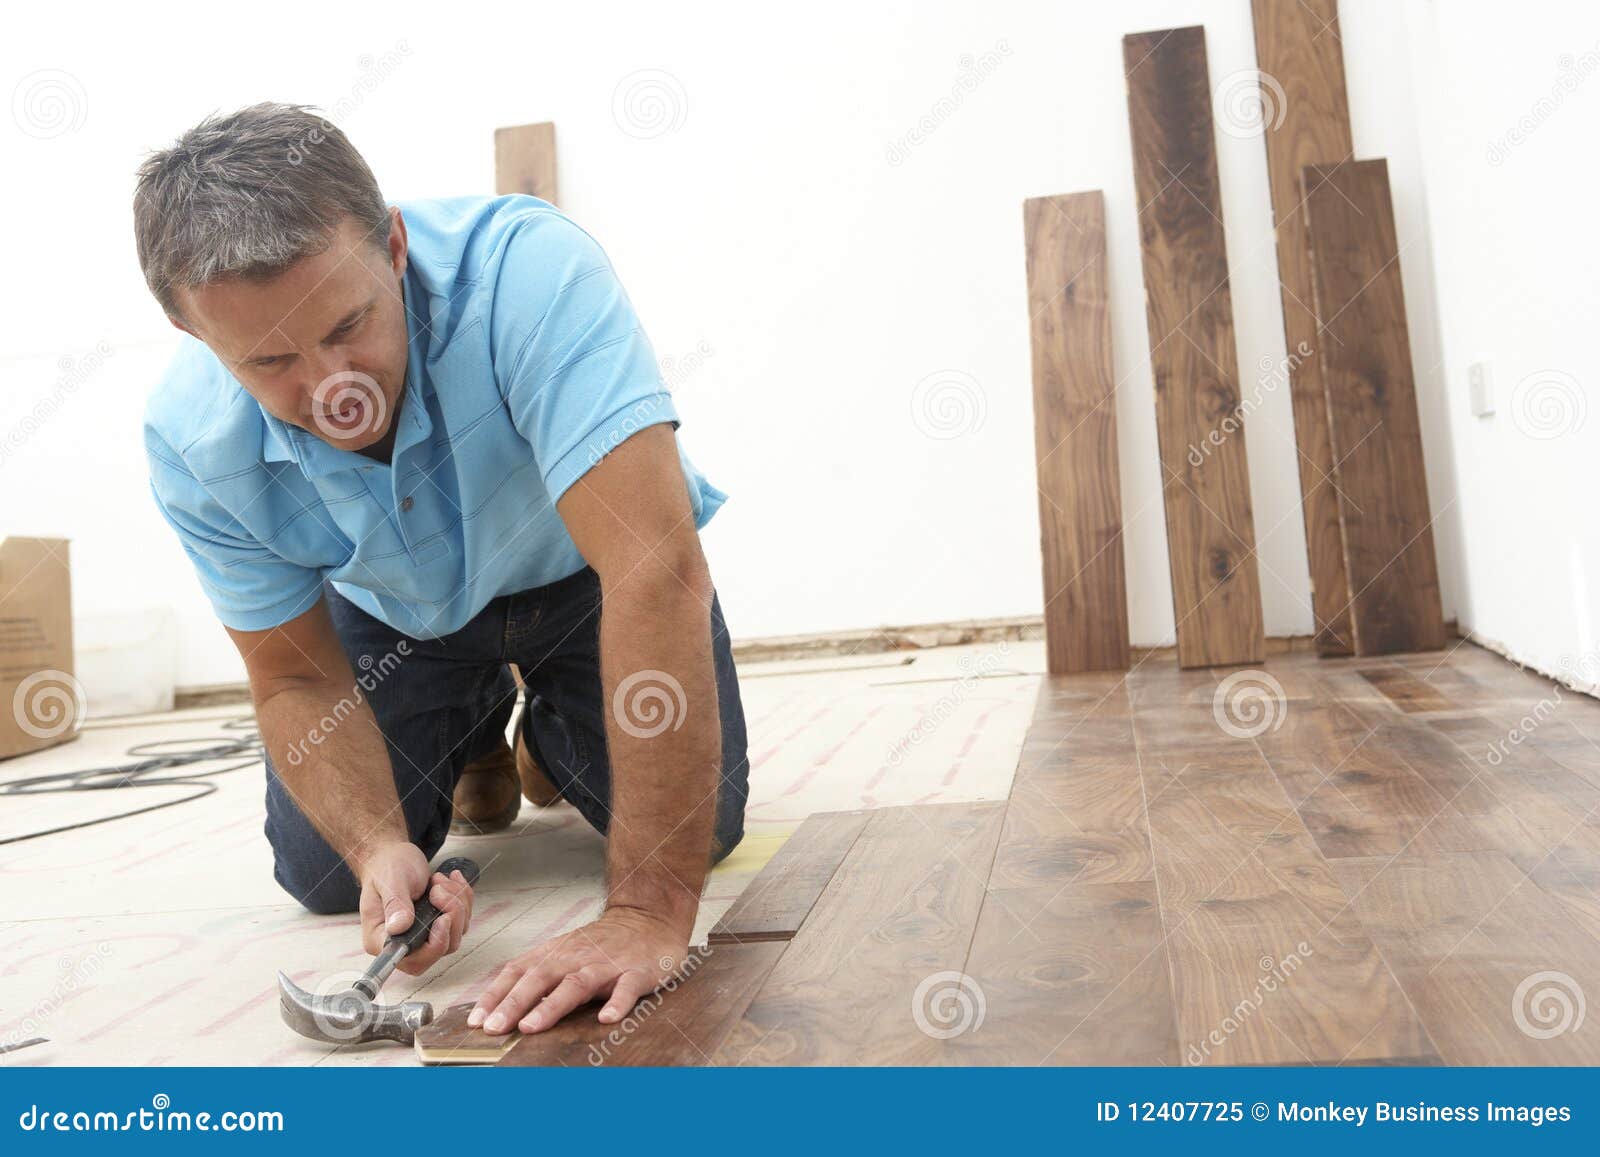 builder laying wooden flooring